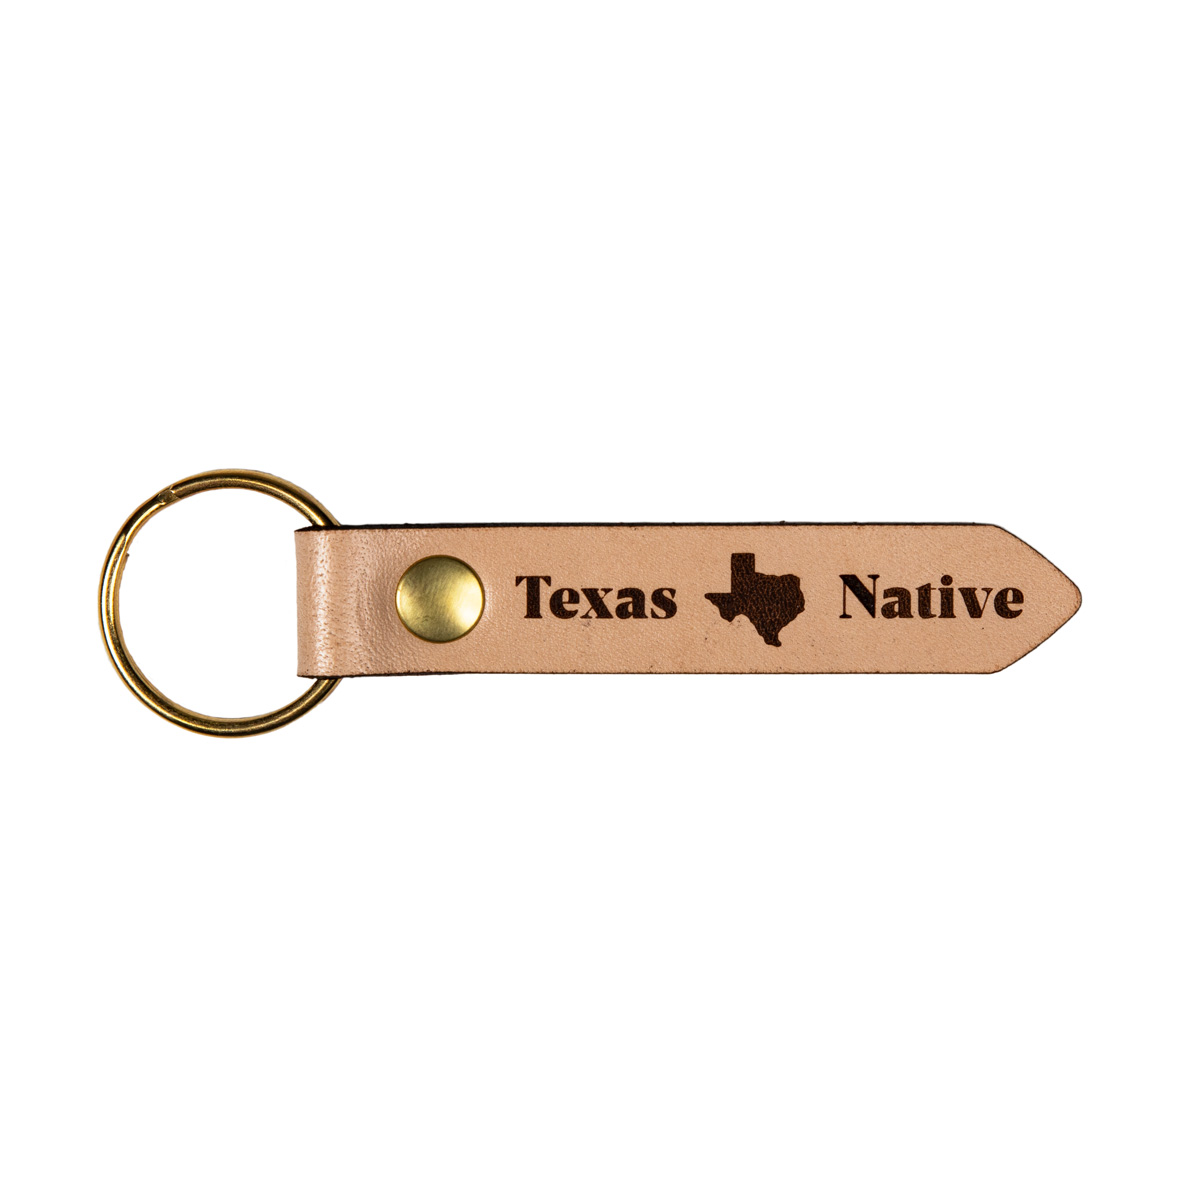 Texas Native Leather Keychain